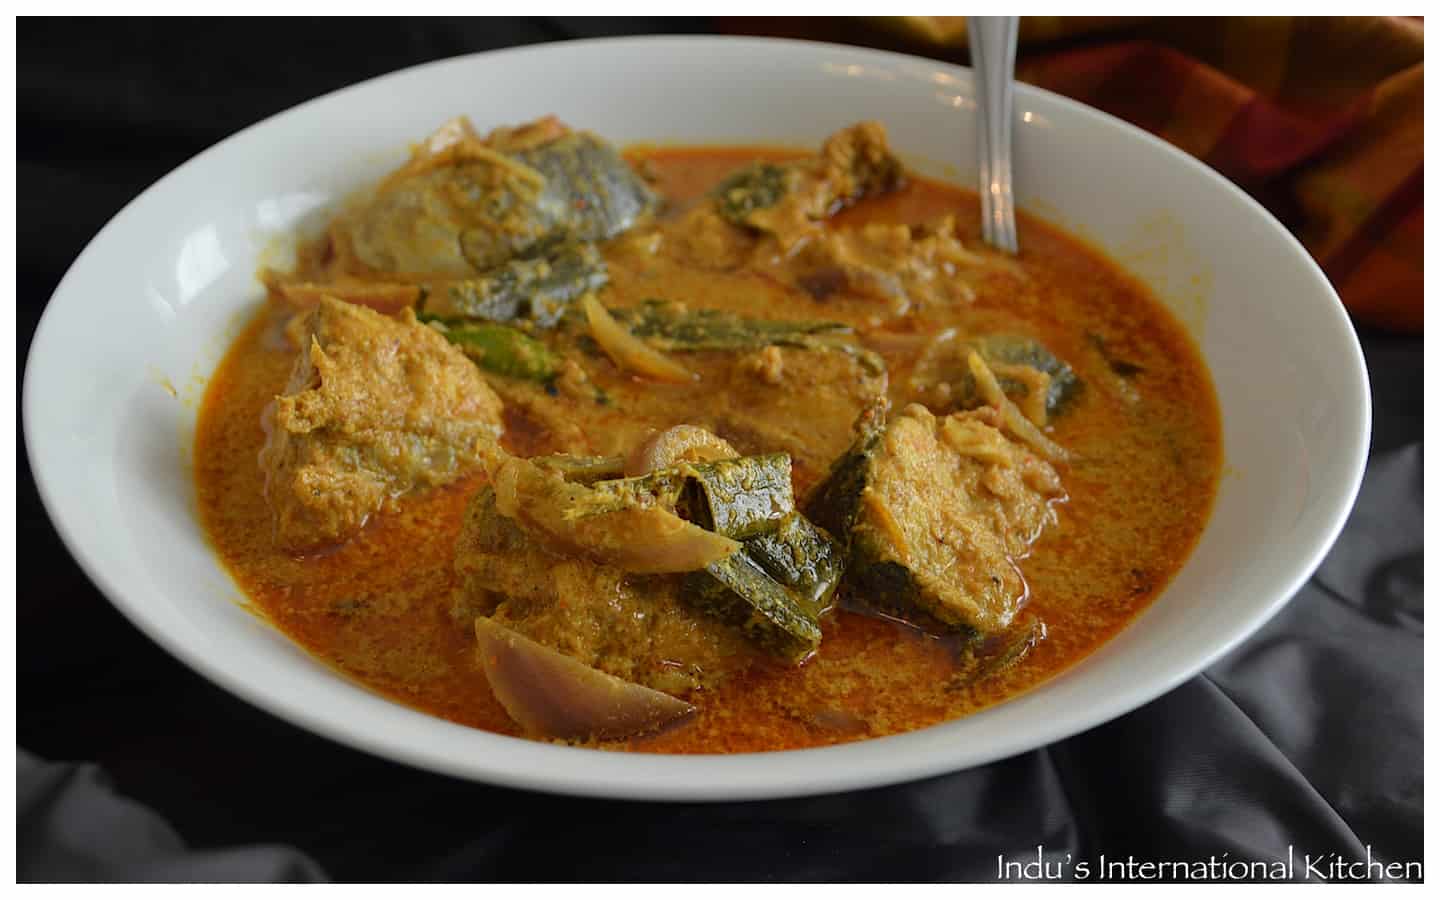 Around the World #3: Sri Lankan Fish Curry